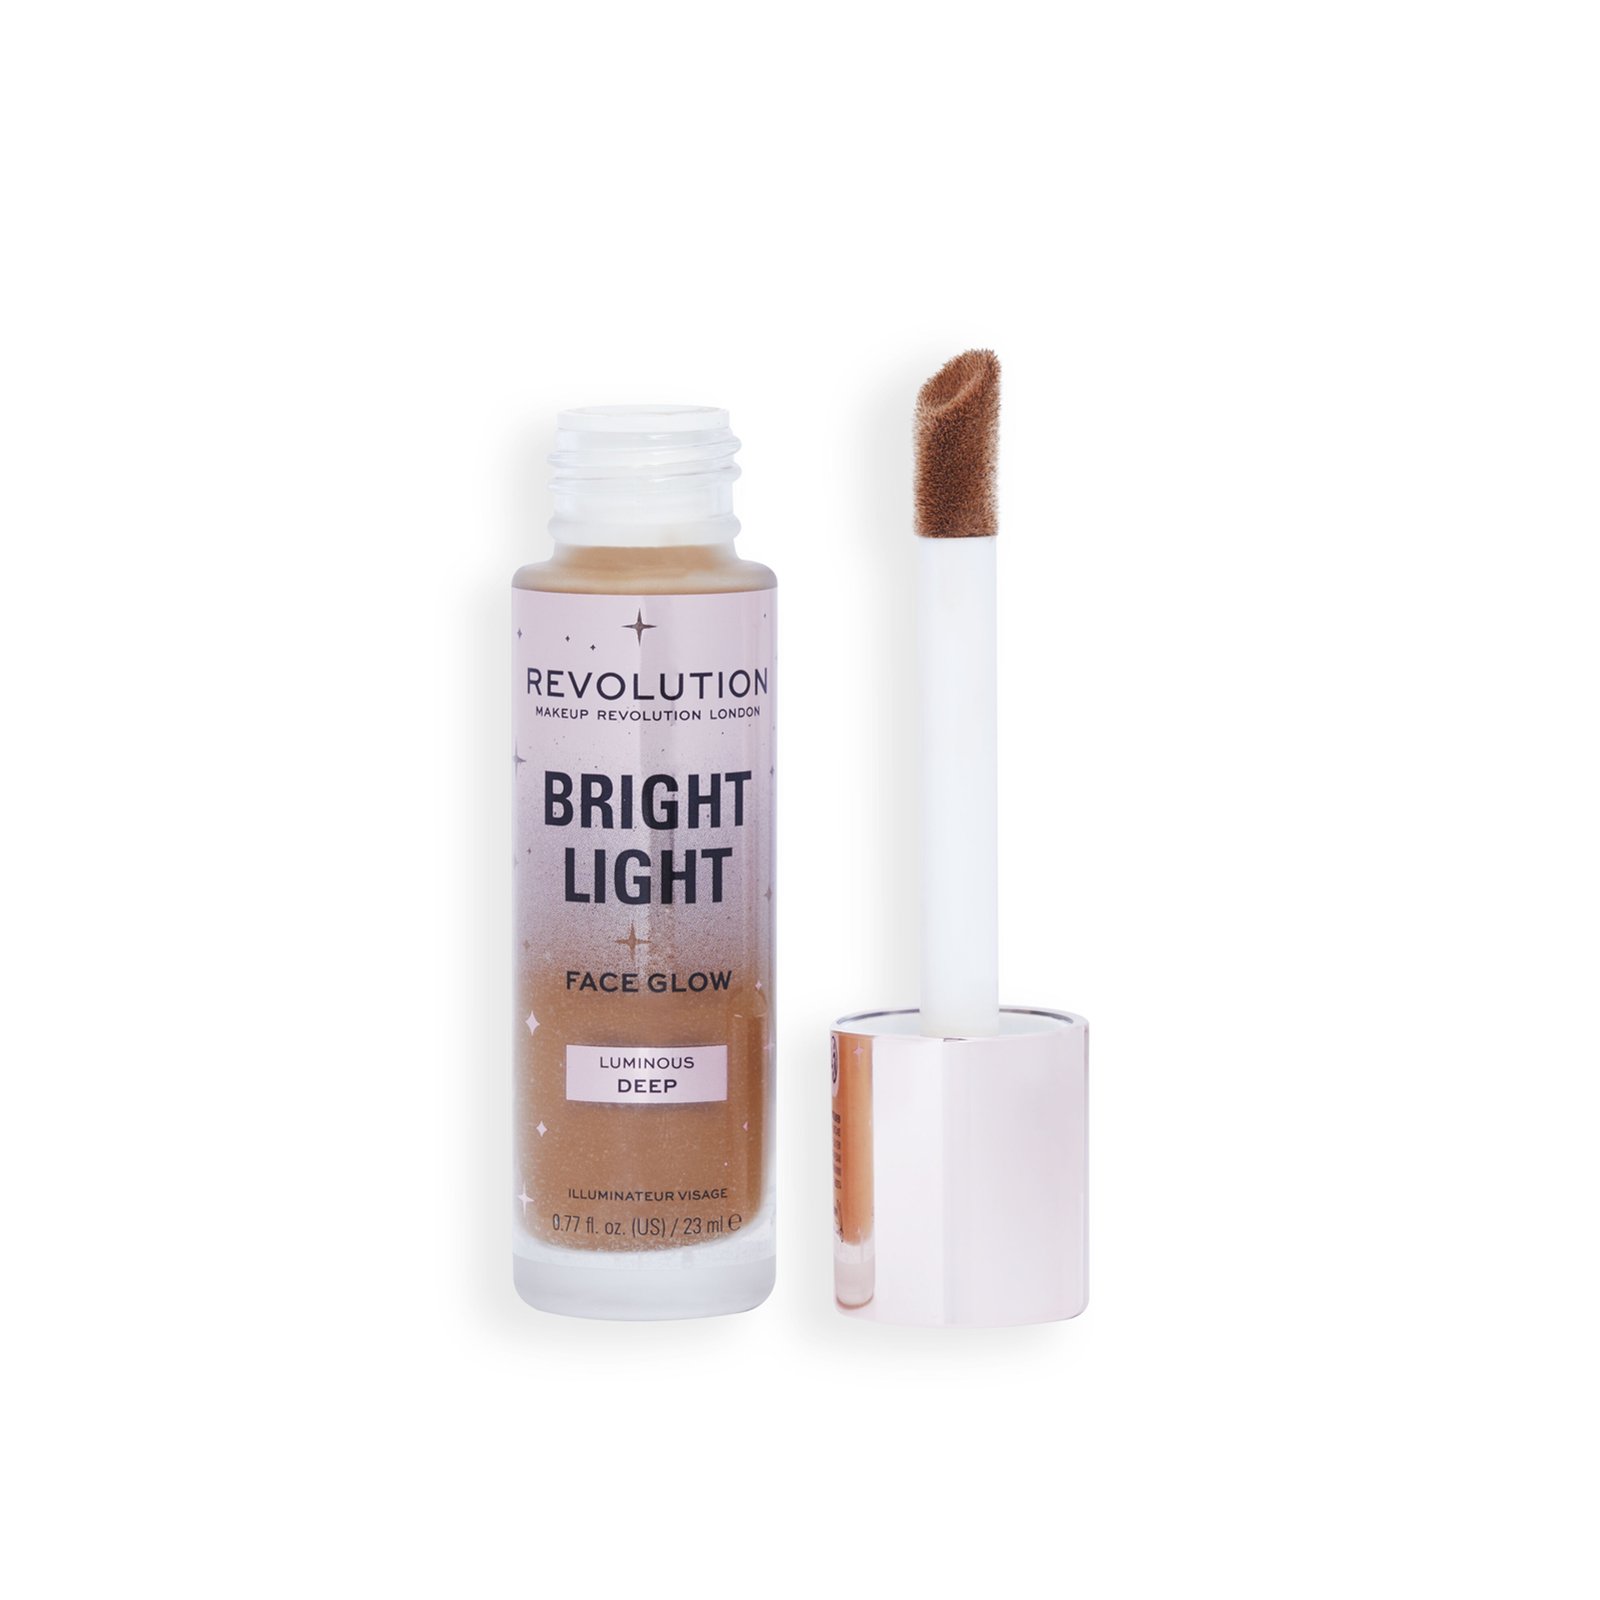 Comprar Makeup Revolution Bright Light Face Glow Luminous Deep